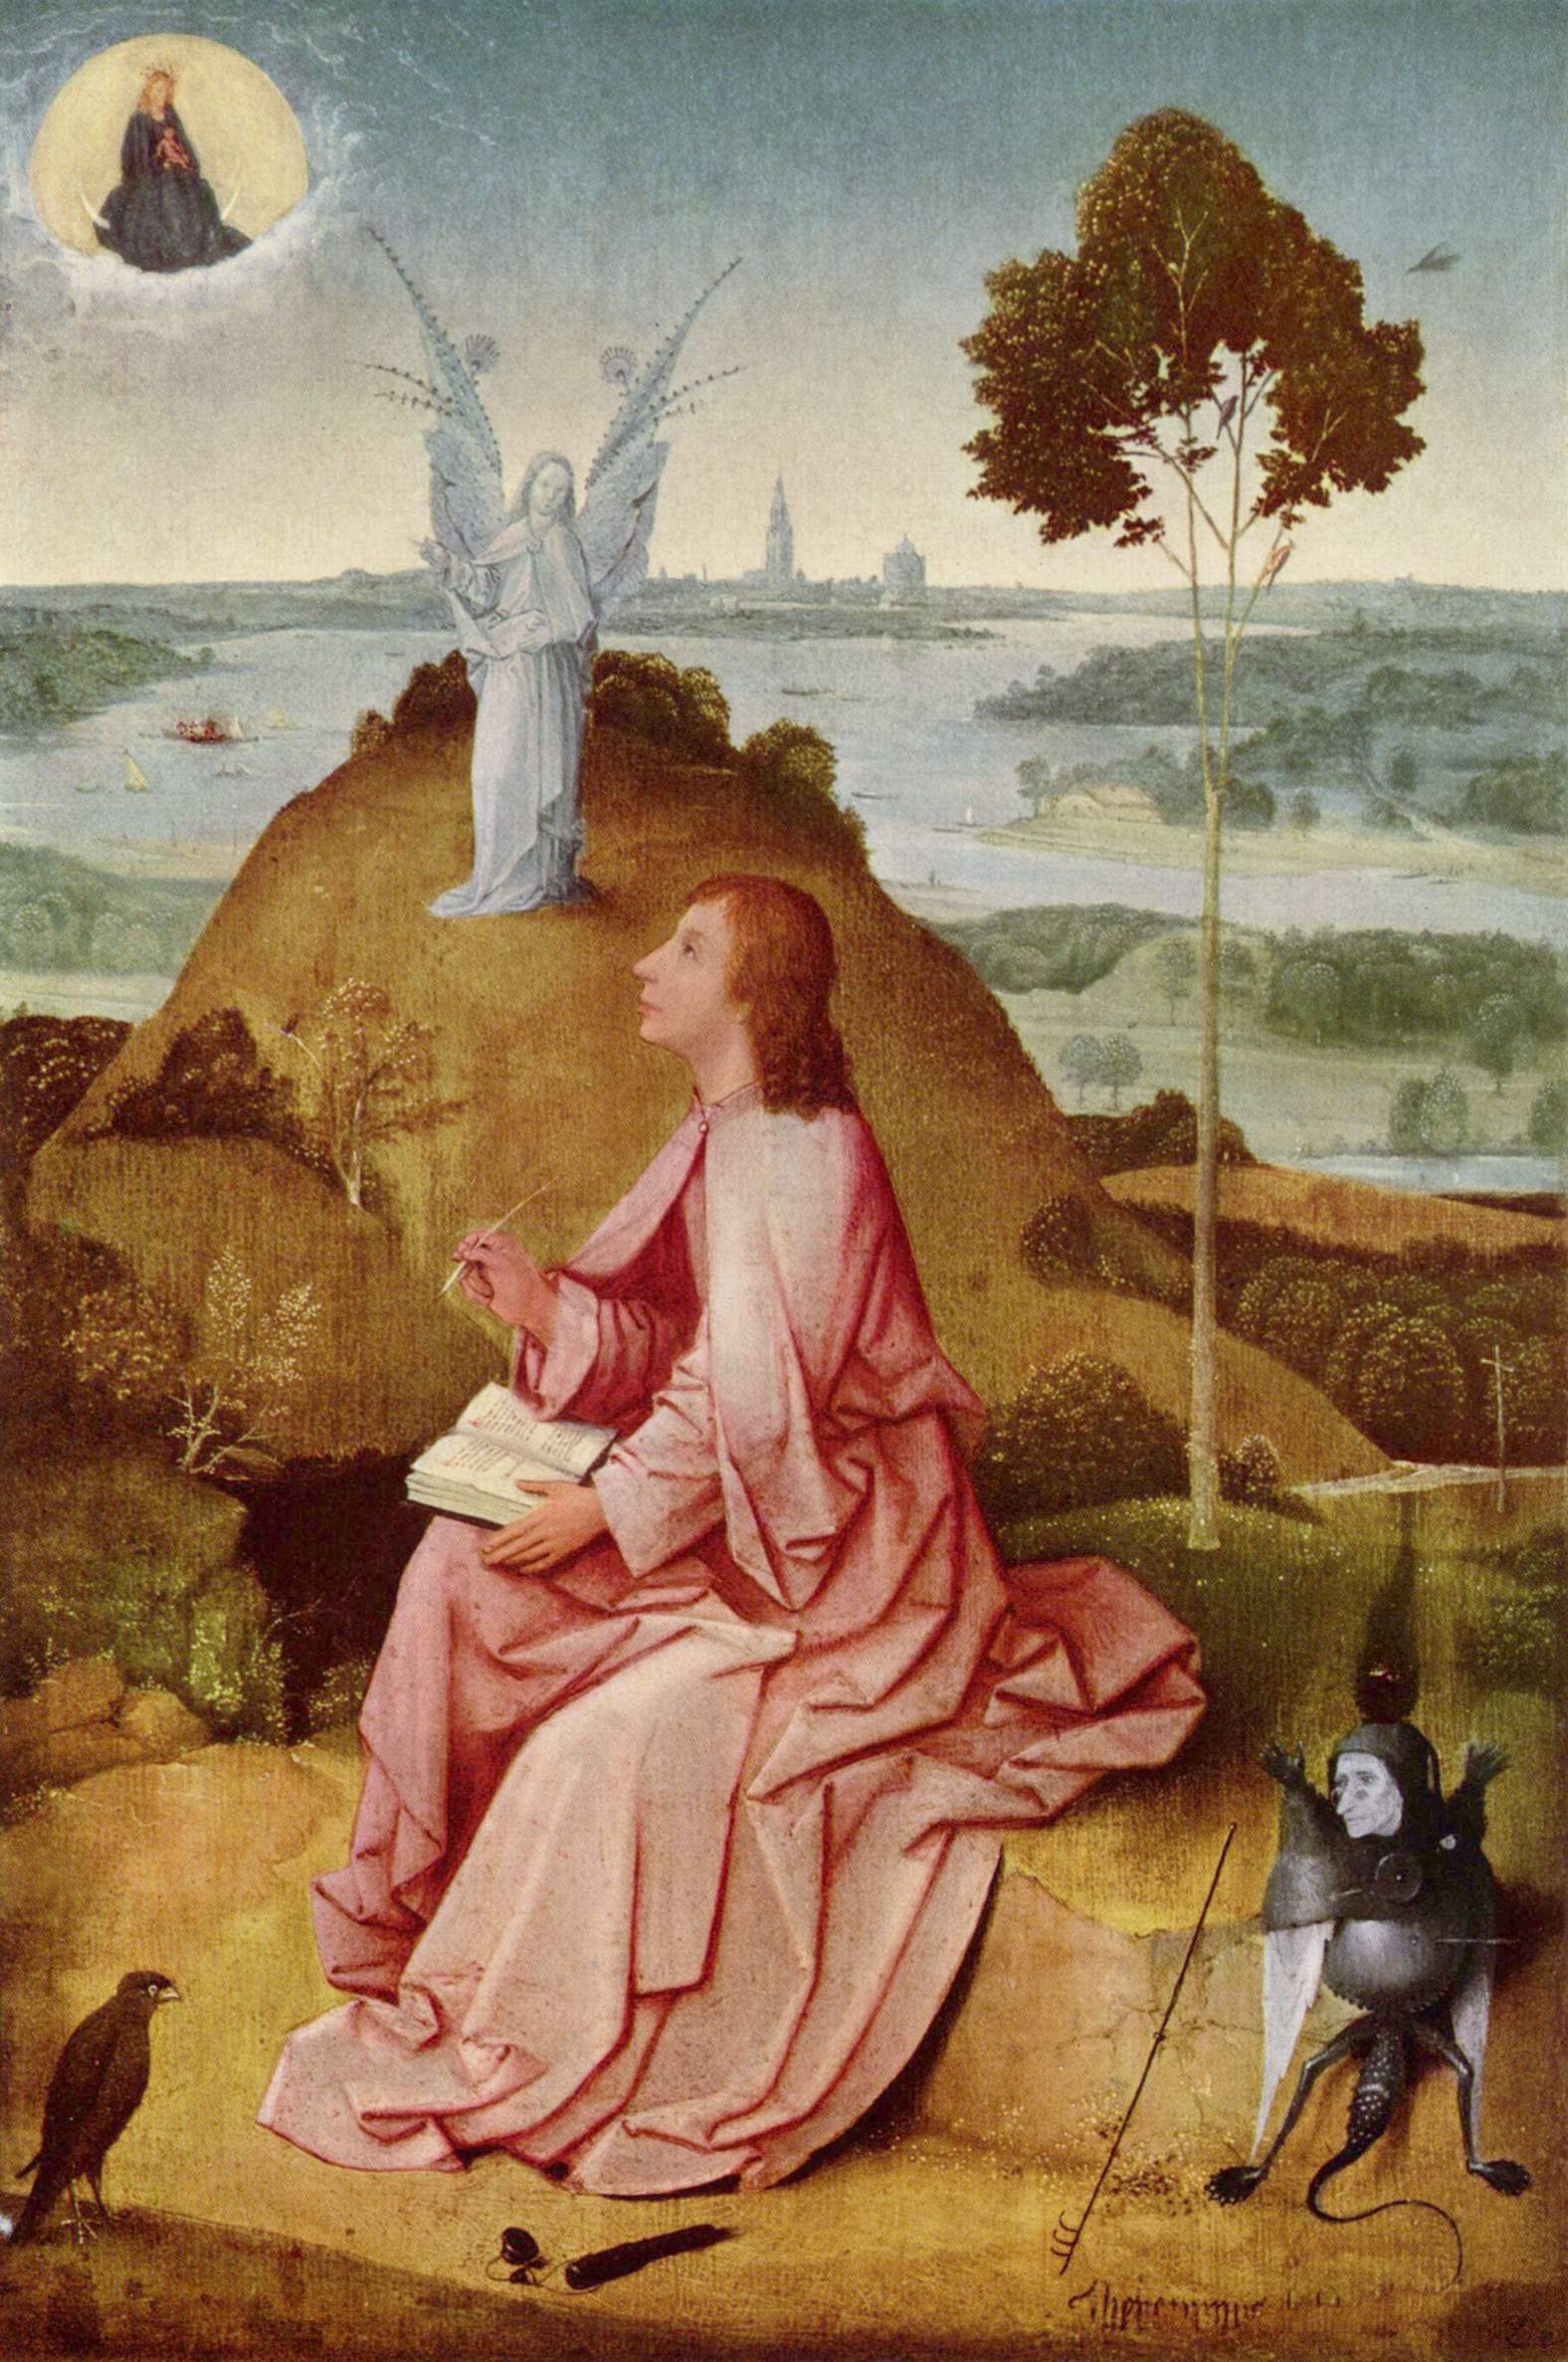 Saint John the Evangelist on Patmos (1485).